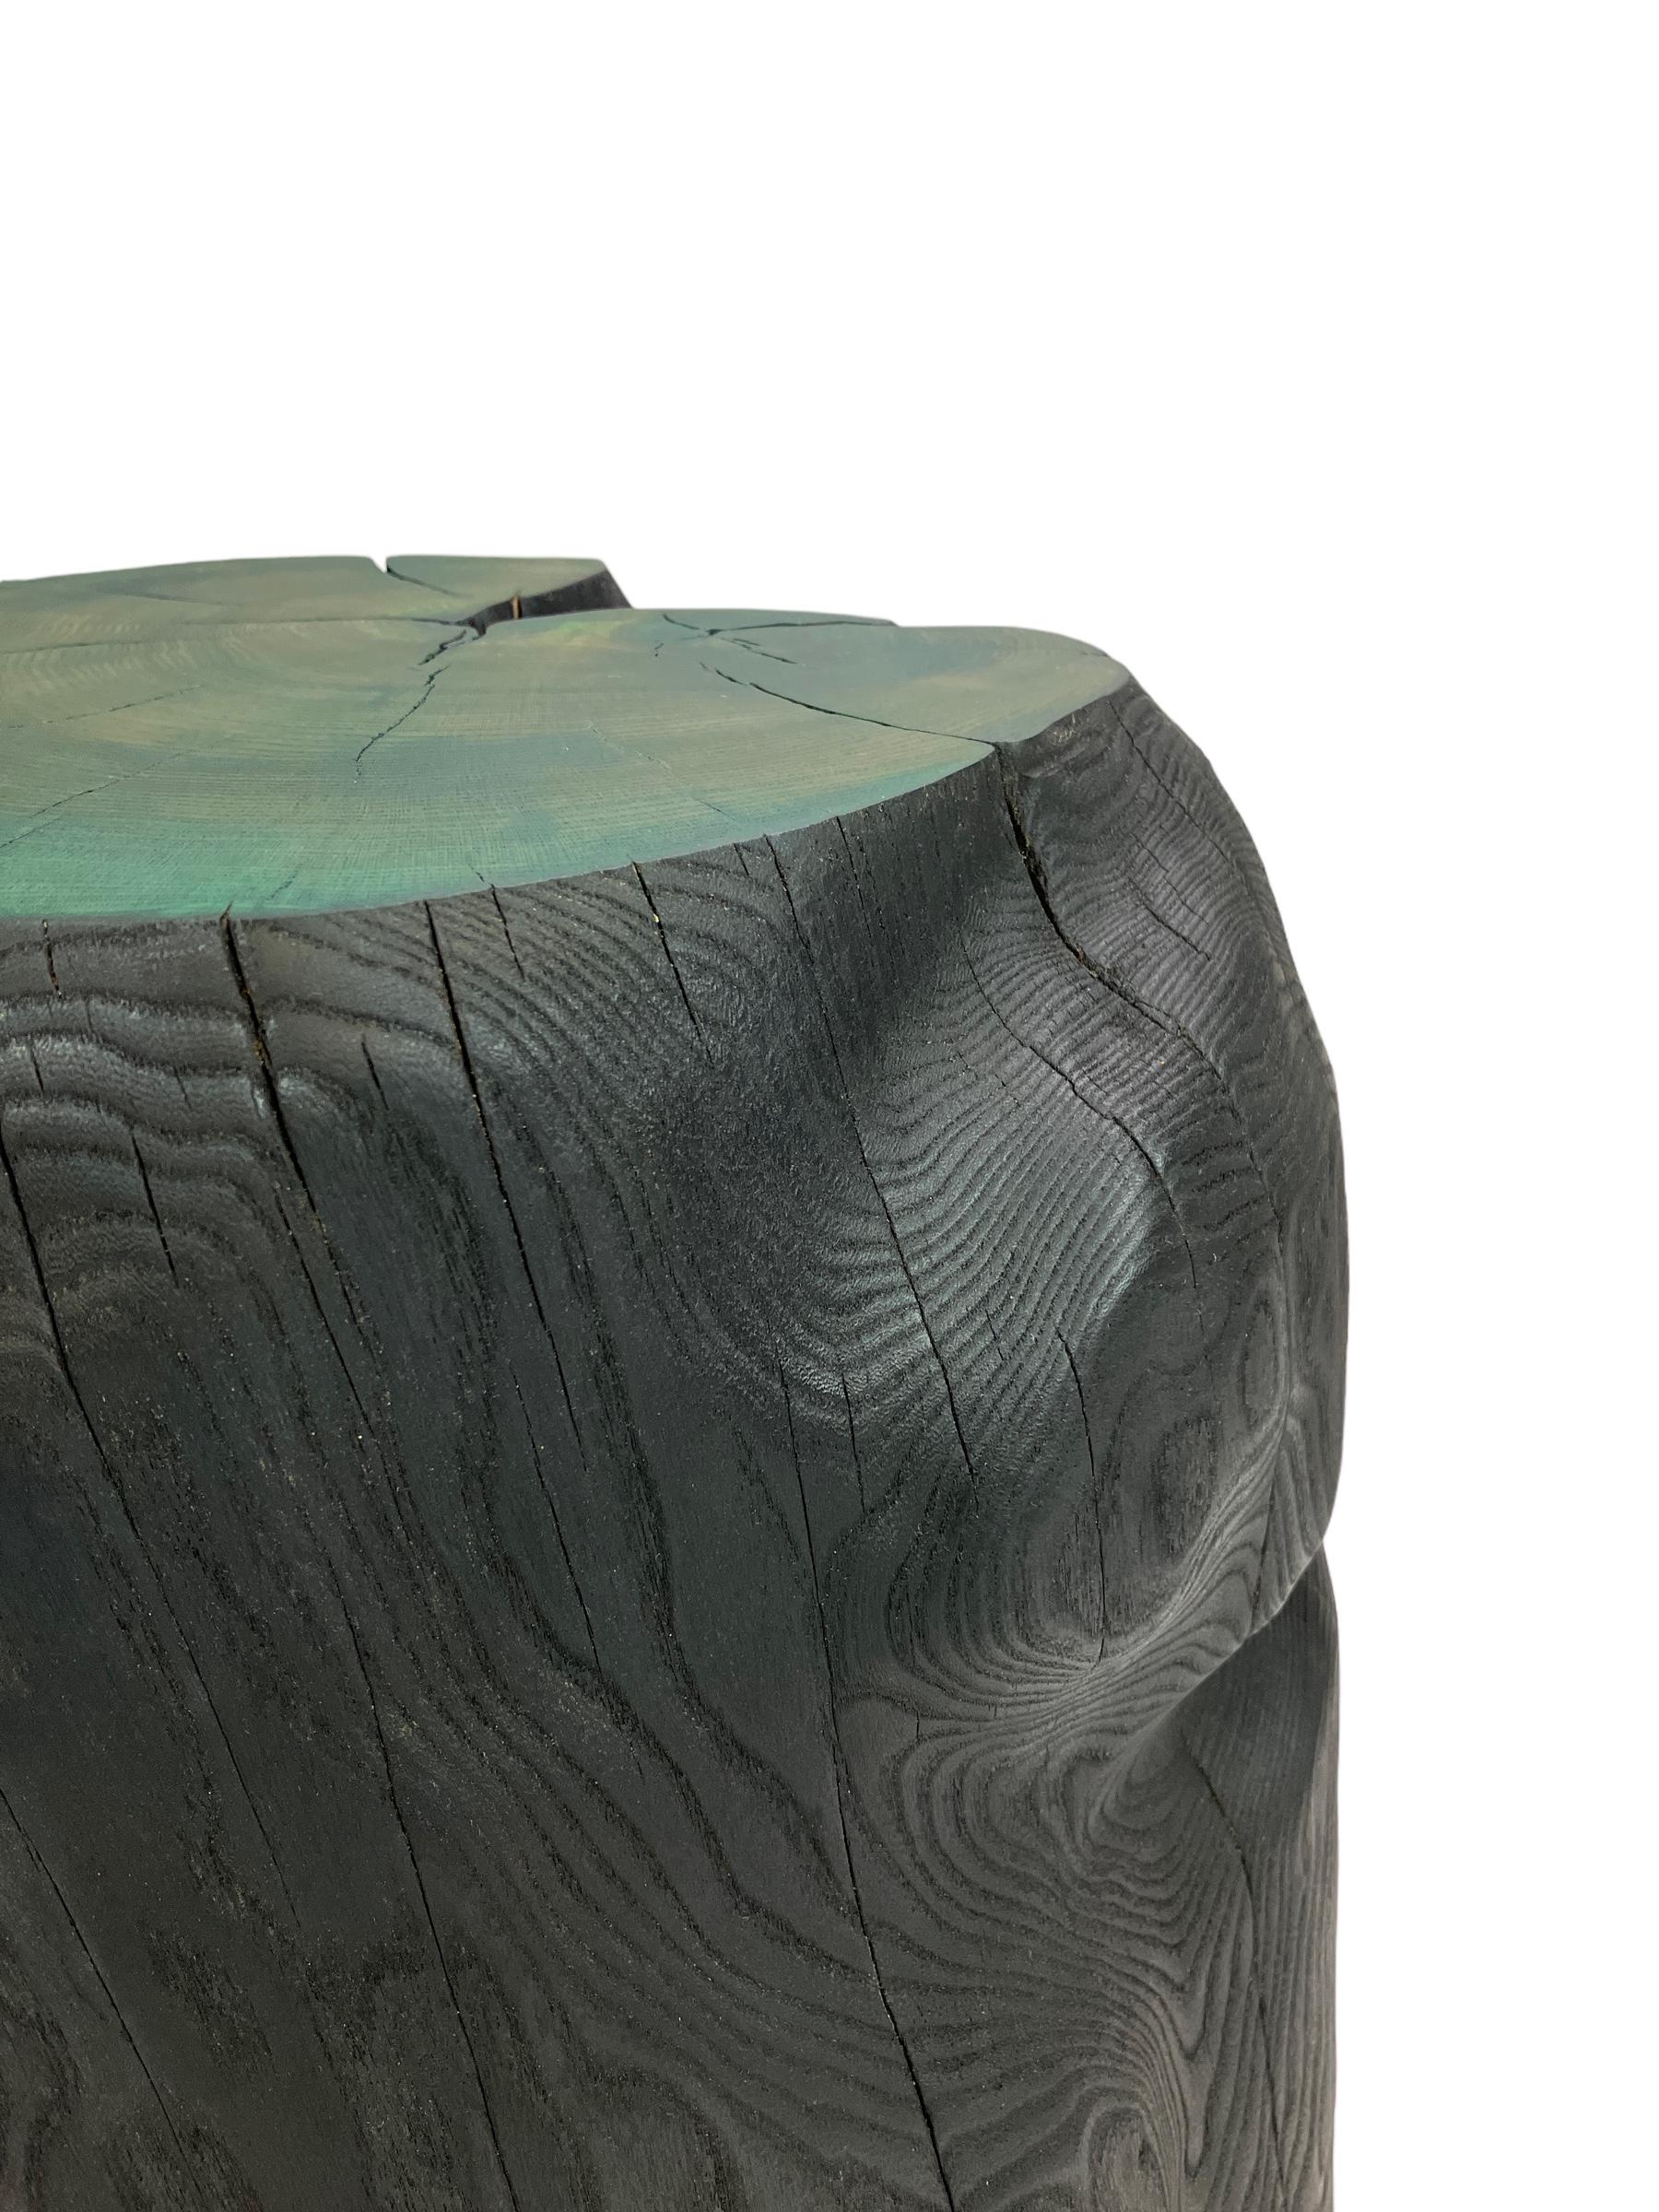 Geschnitzter skulpturaler Holzhocker oder Tisch „Zhopp“ von ELAKFORM (Geölt) im Angebot